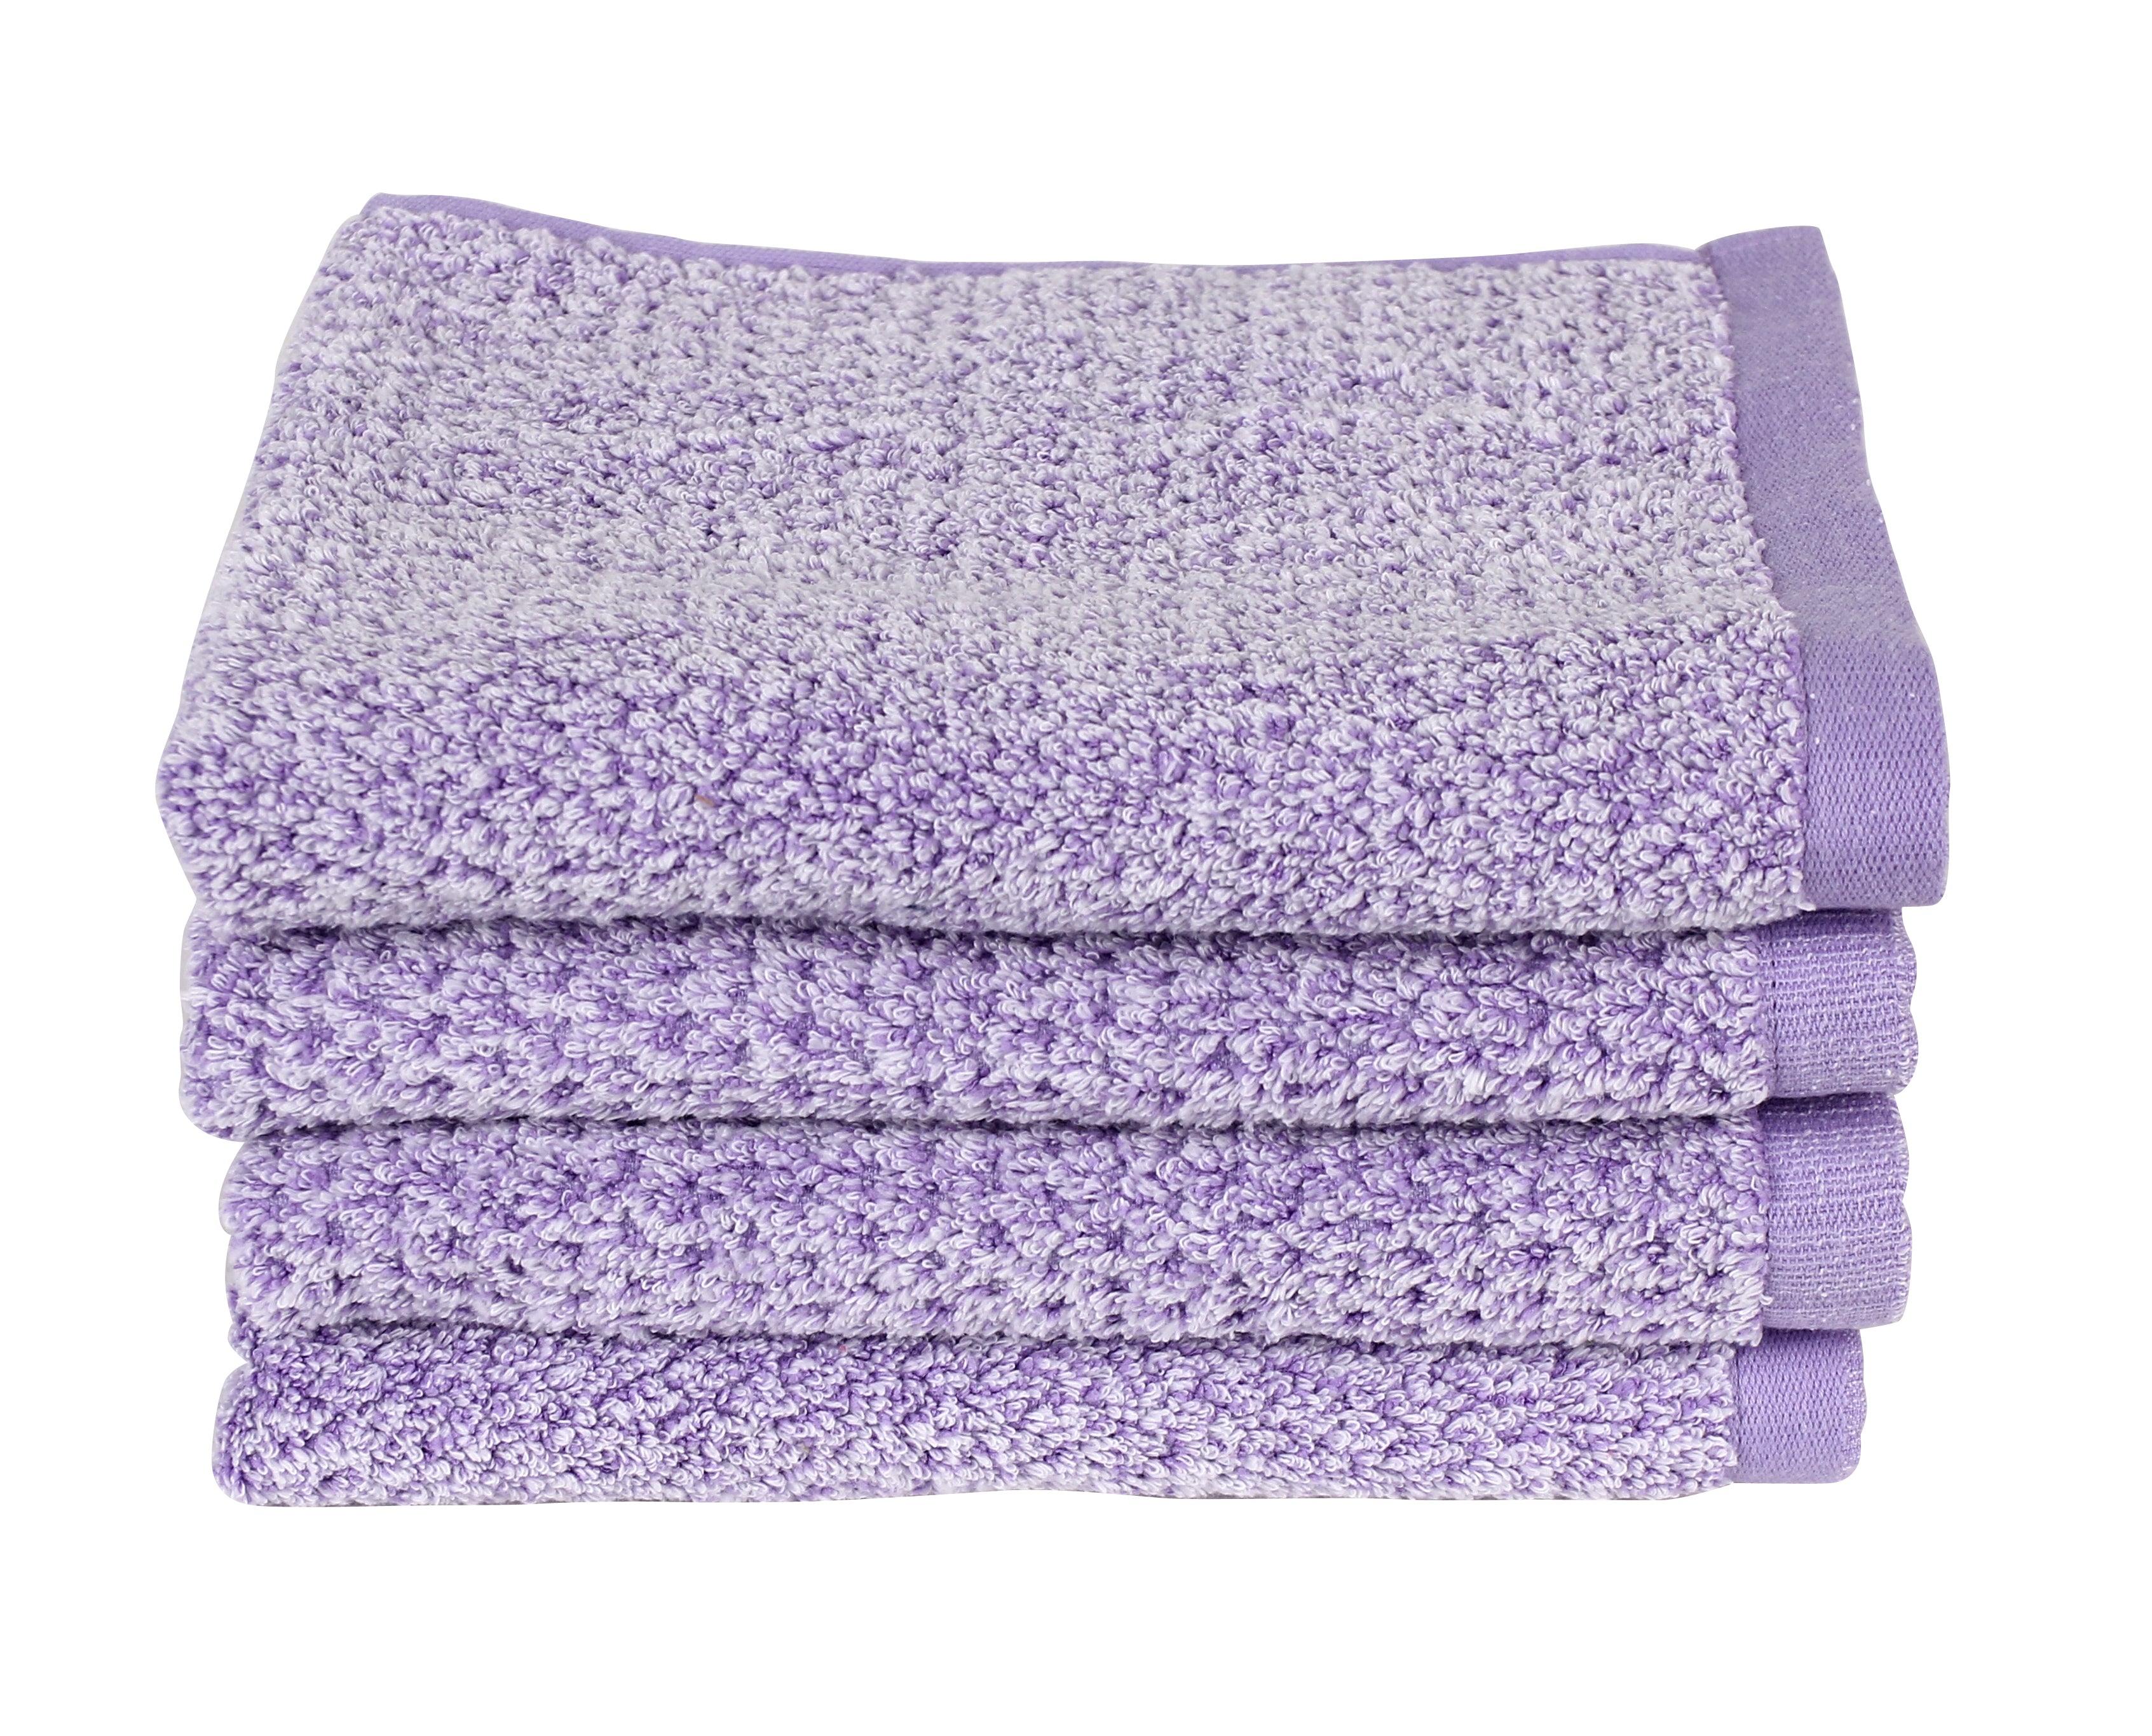 Diamond Jacquard Towels, Hand Towels - 4 Pack, Lavender